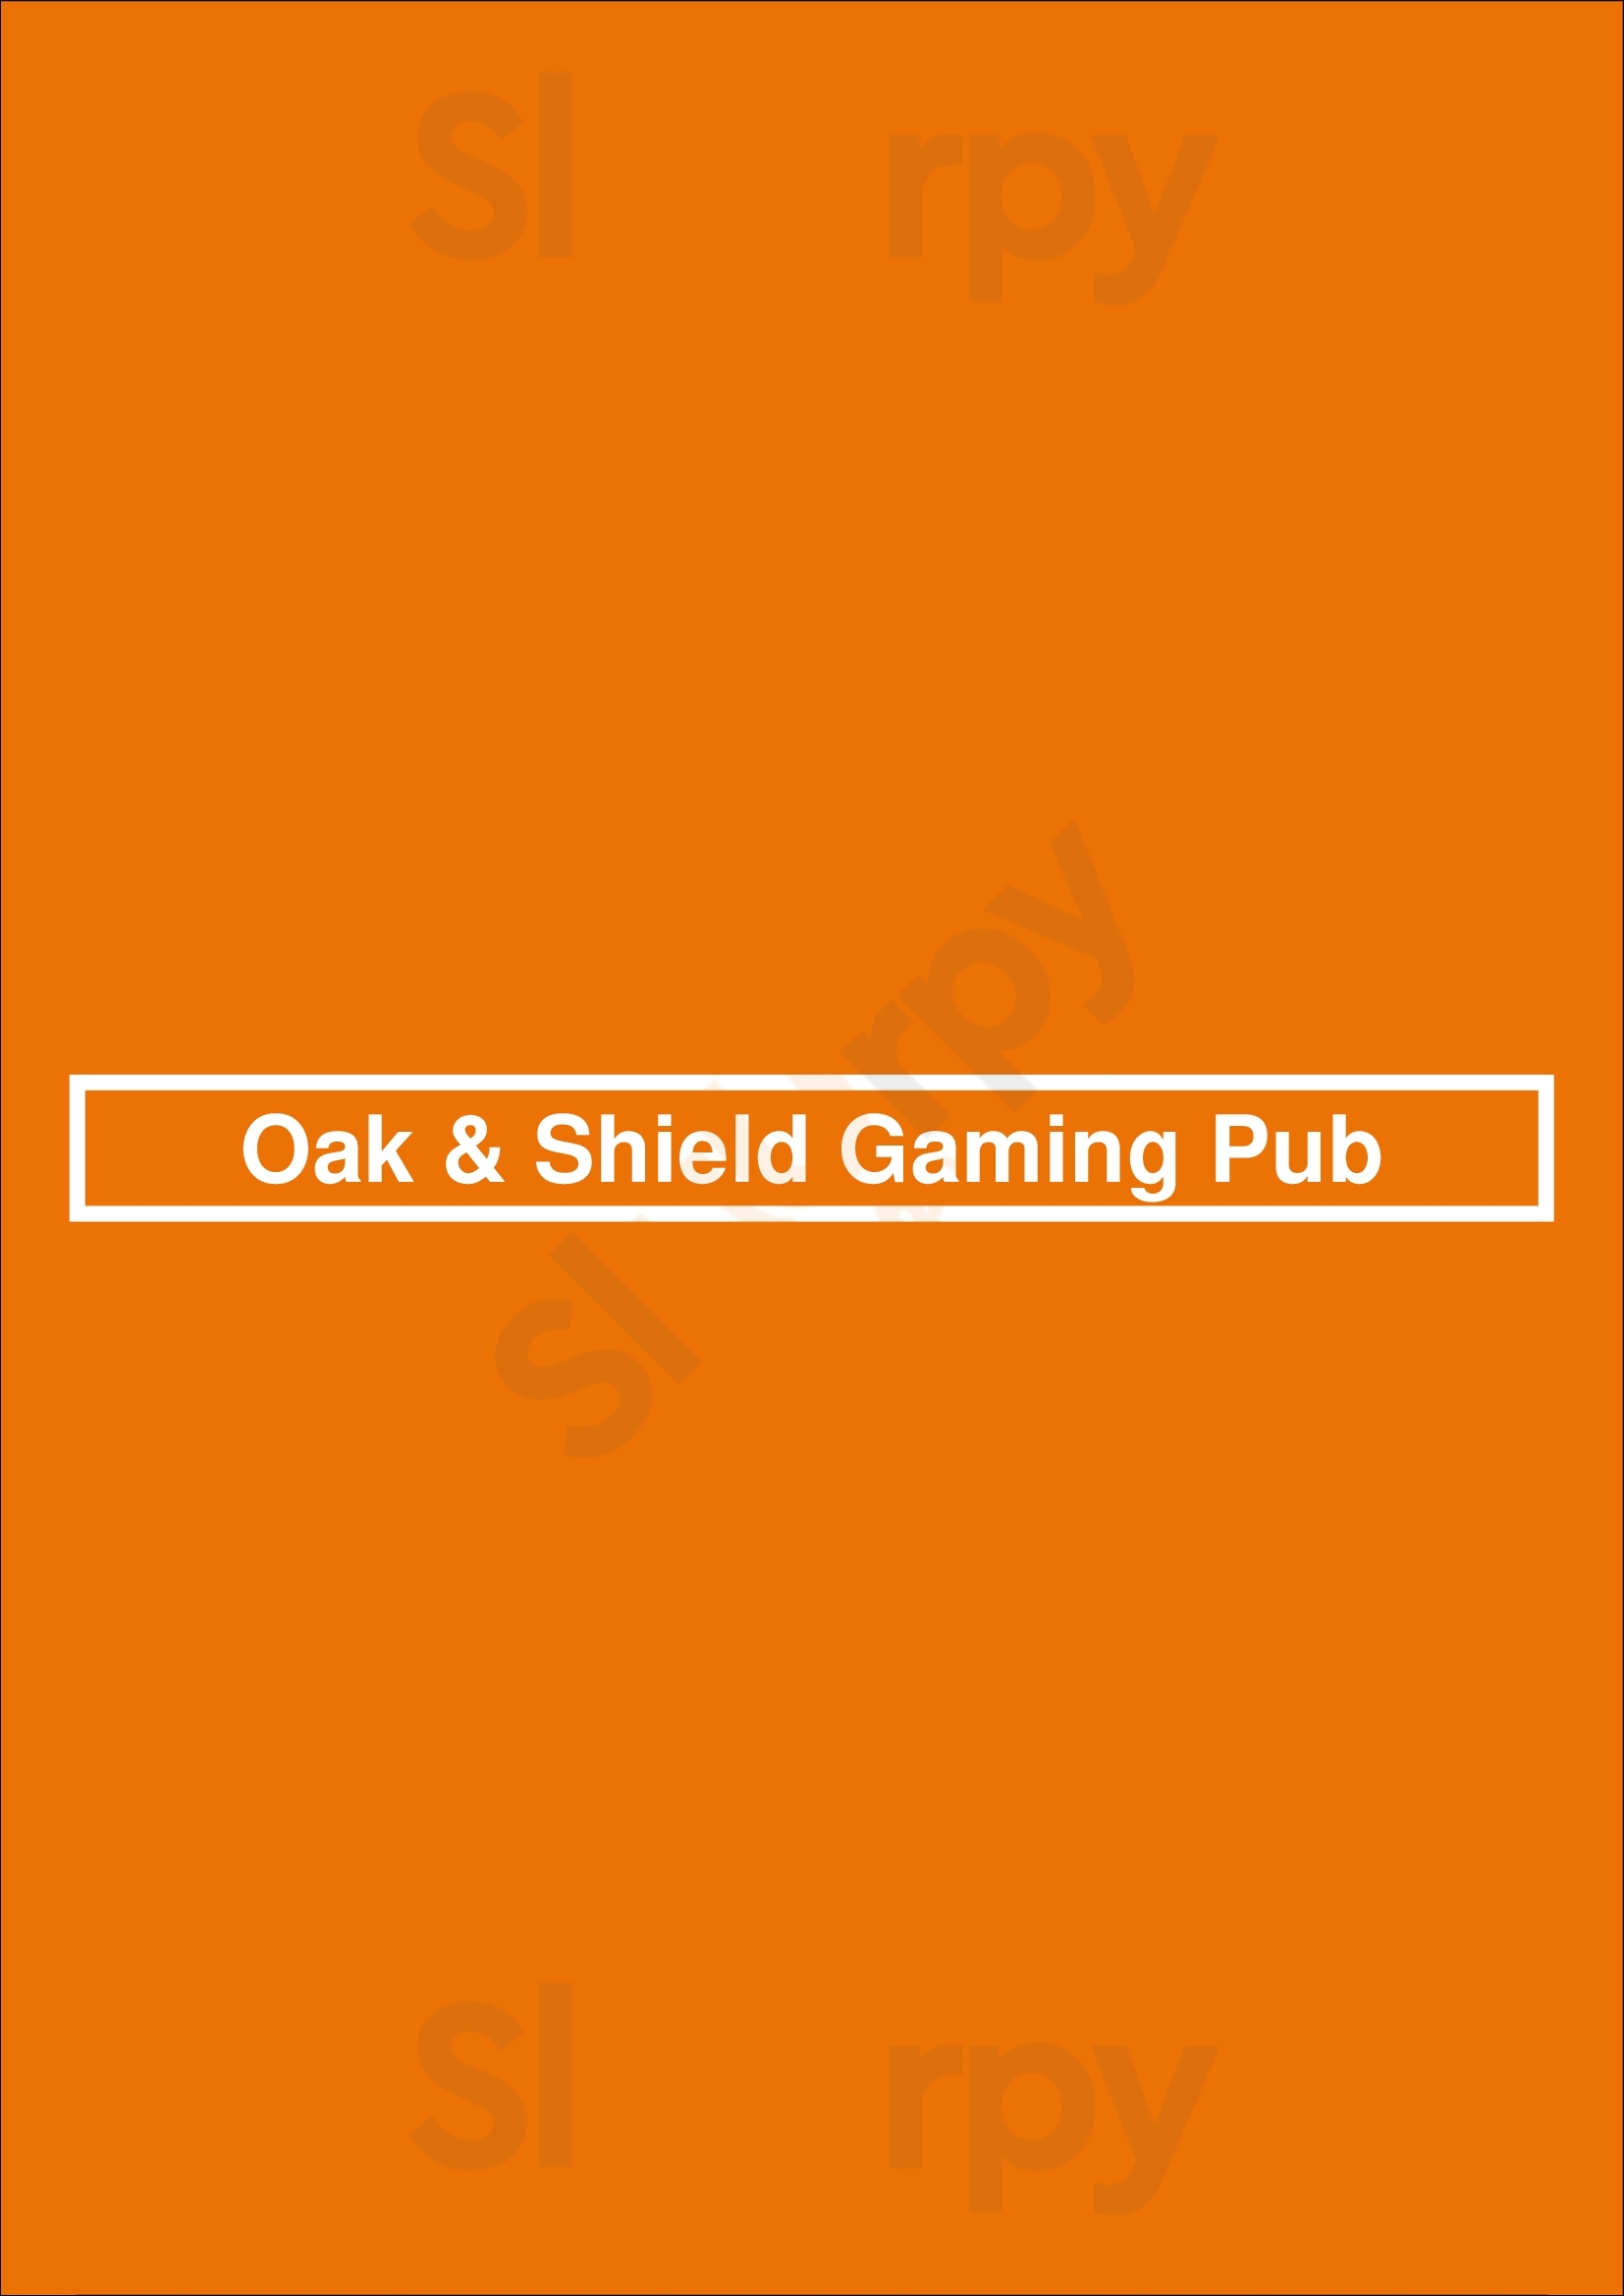 Oak & Shield Gaming Pub Milwaukee Menu - 1